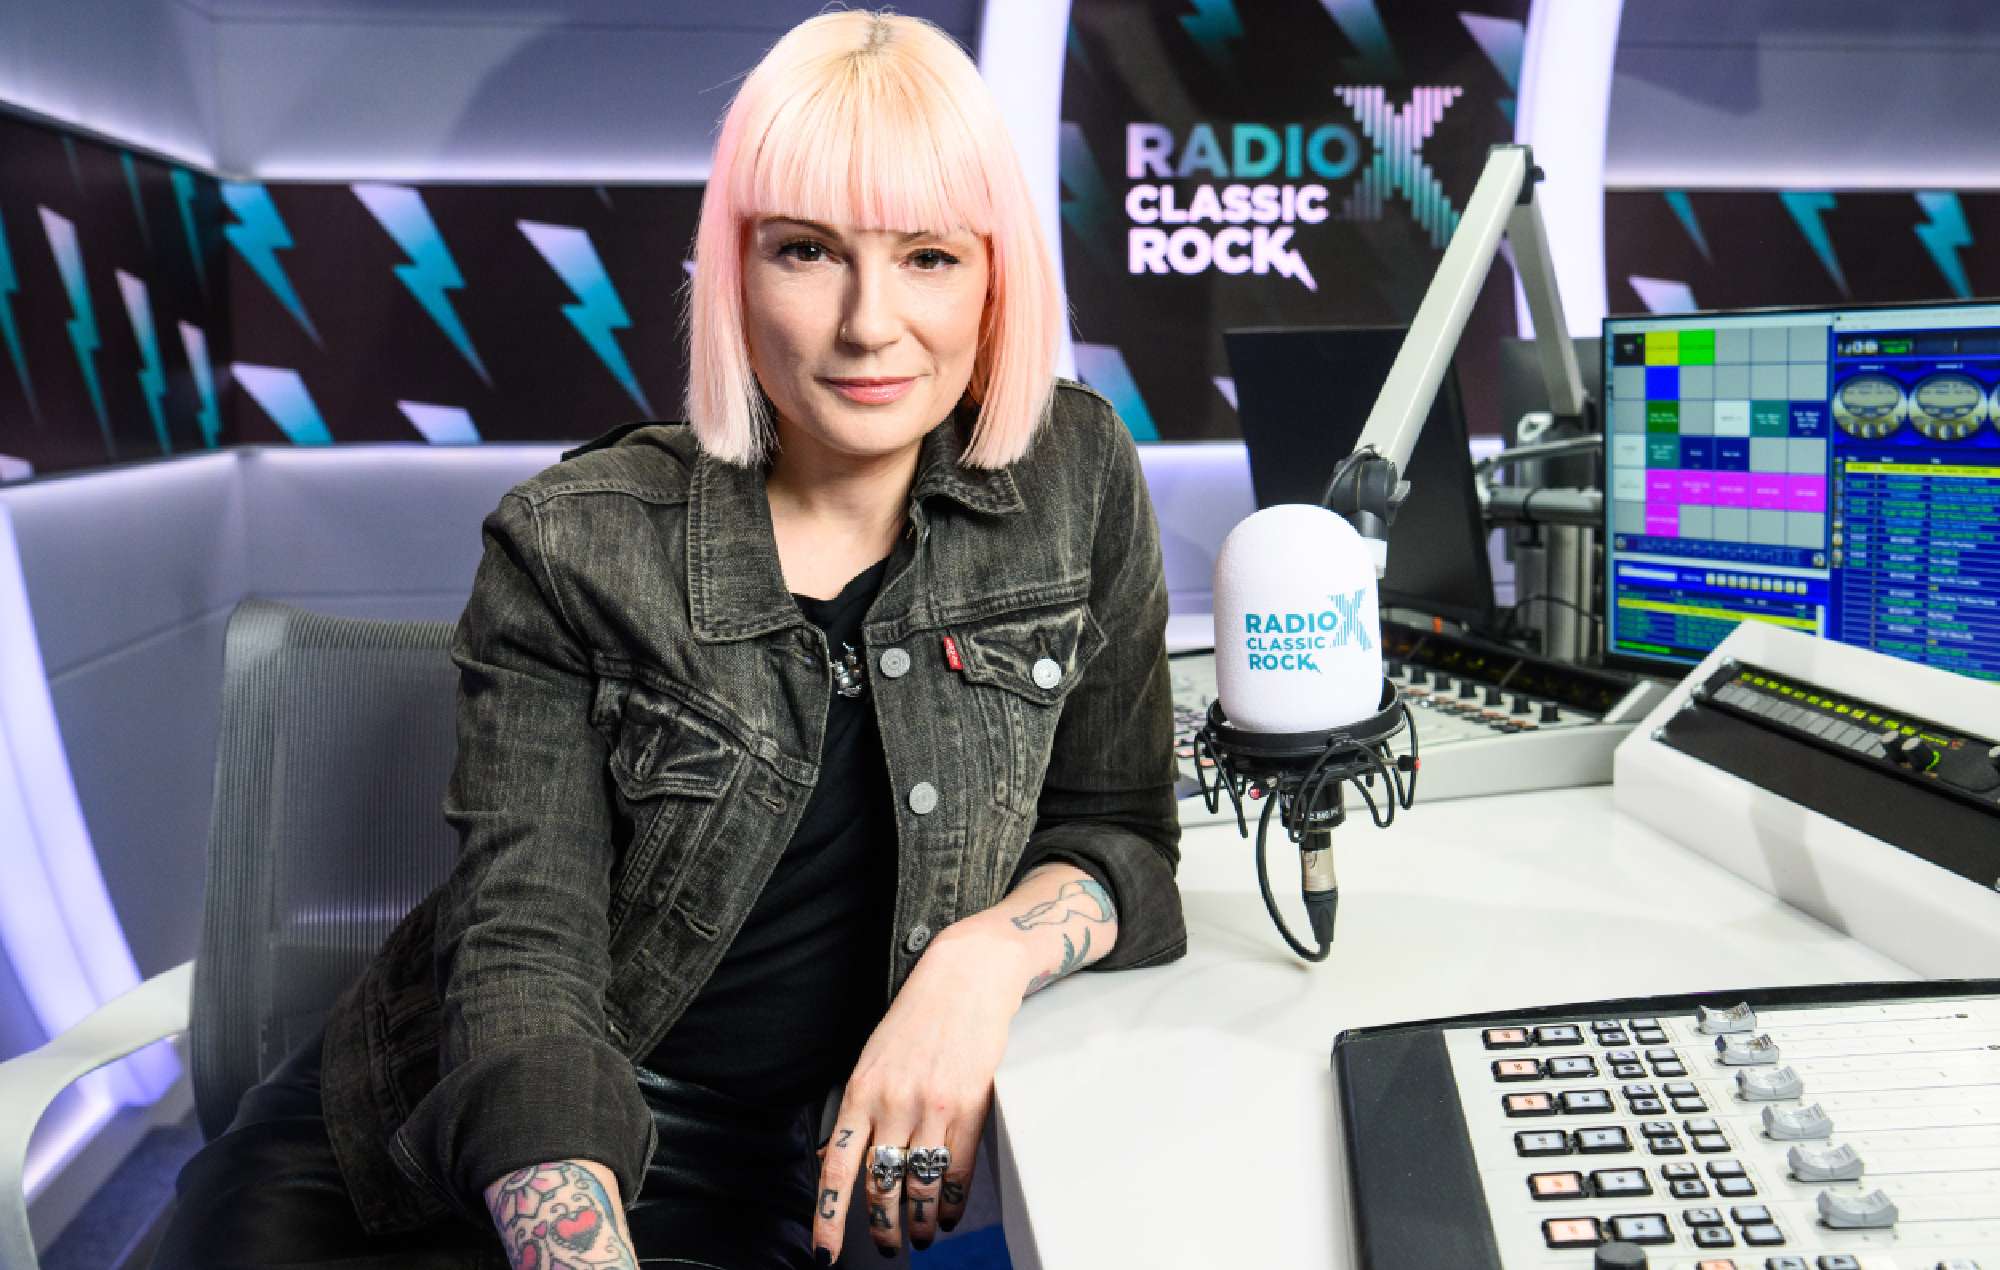 Radio X lanza la nueva emisora "Classic Rock